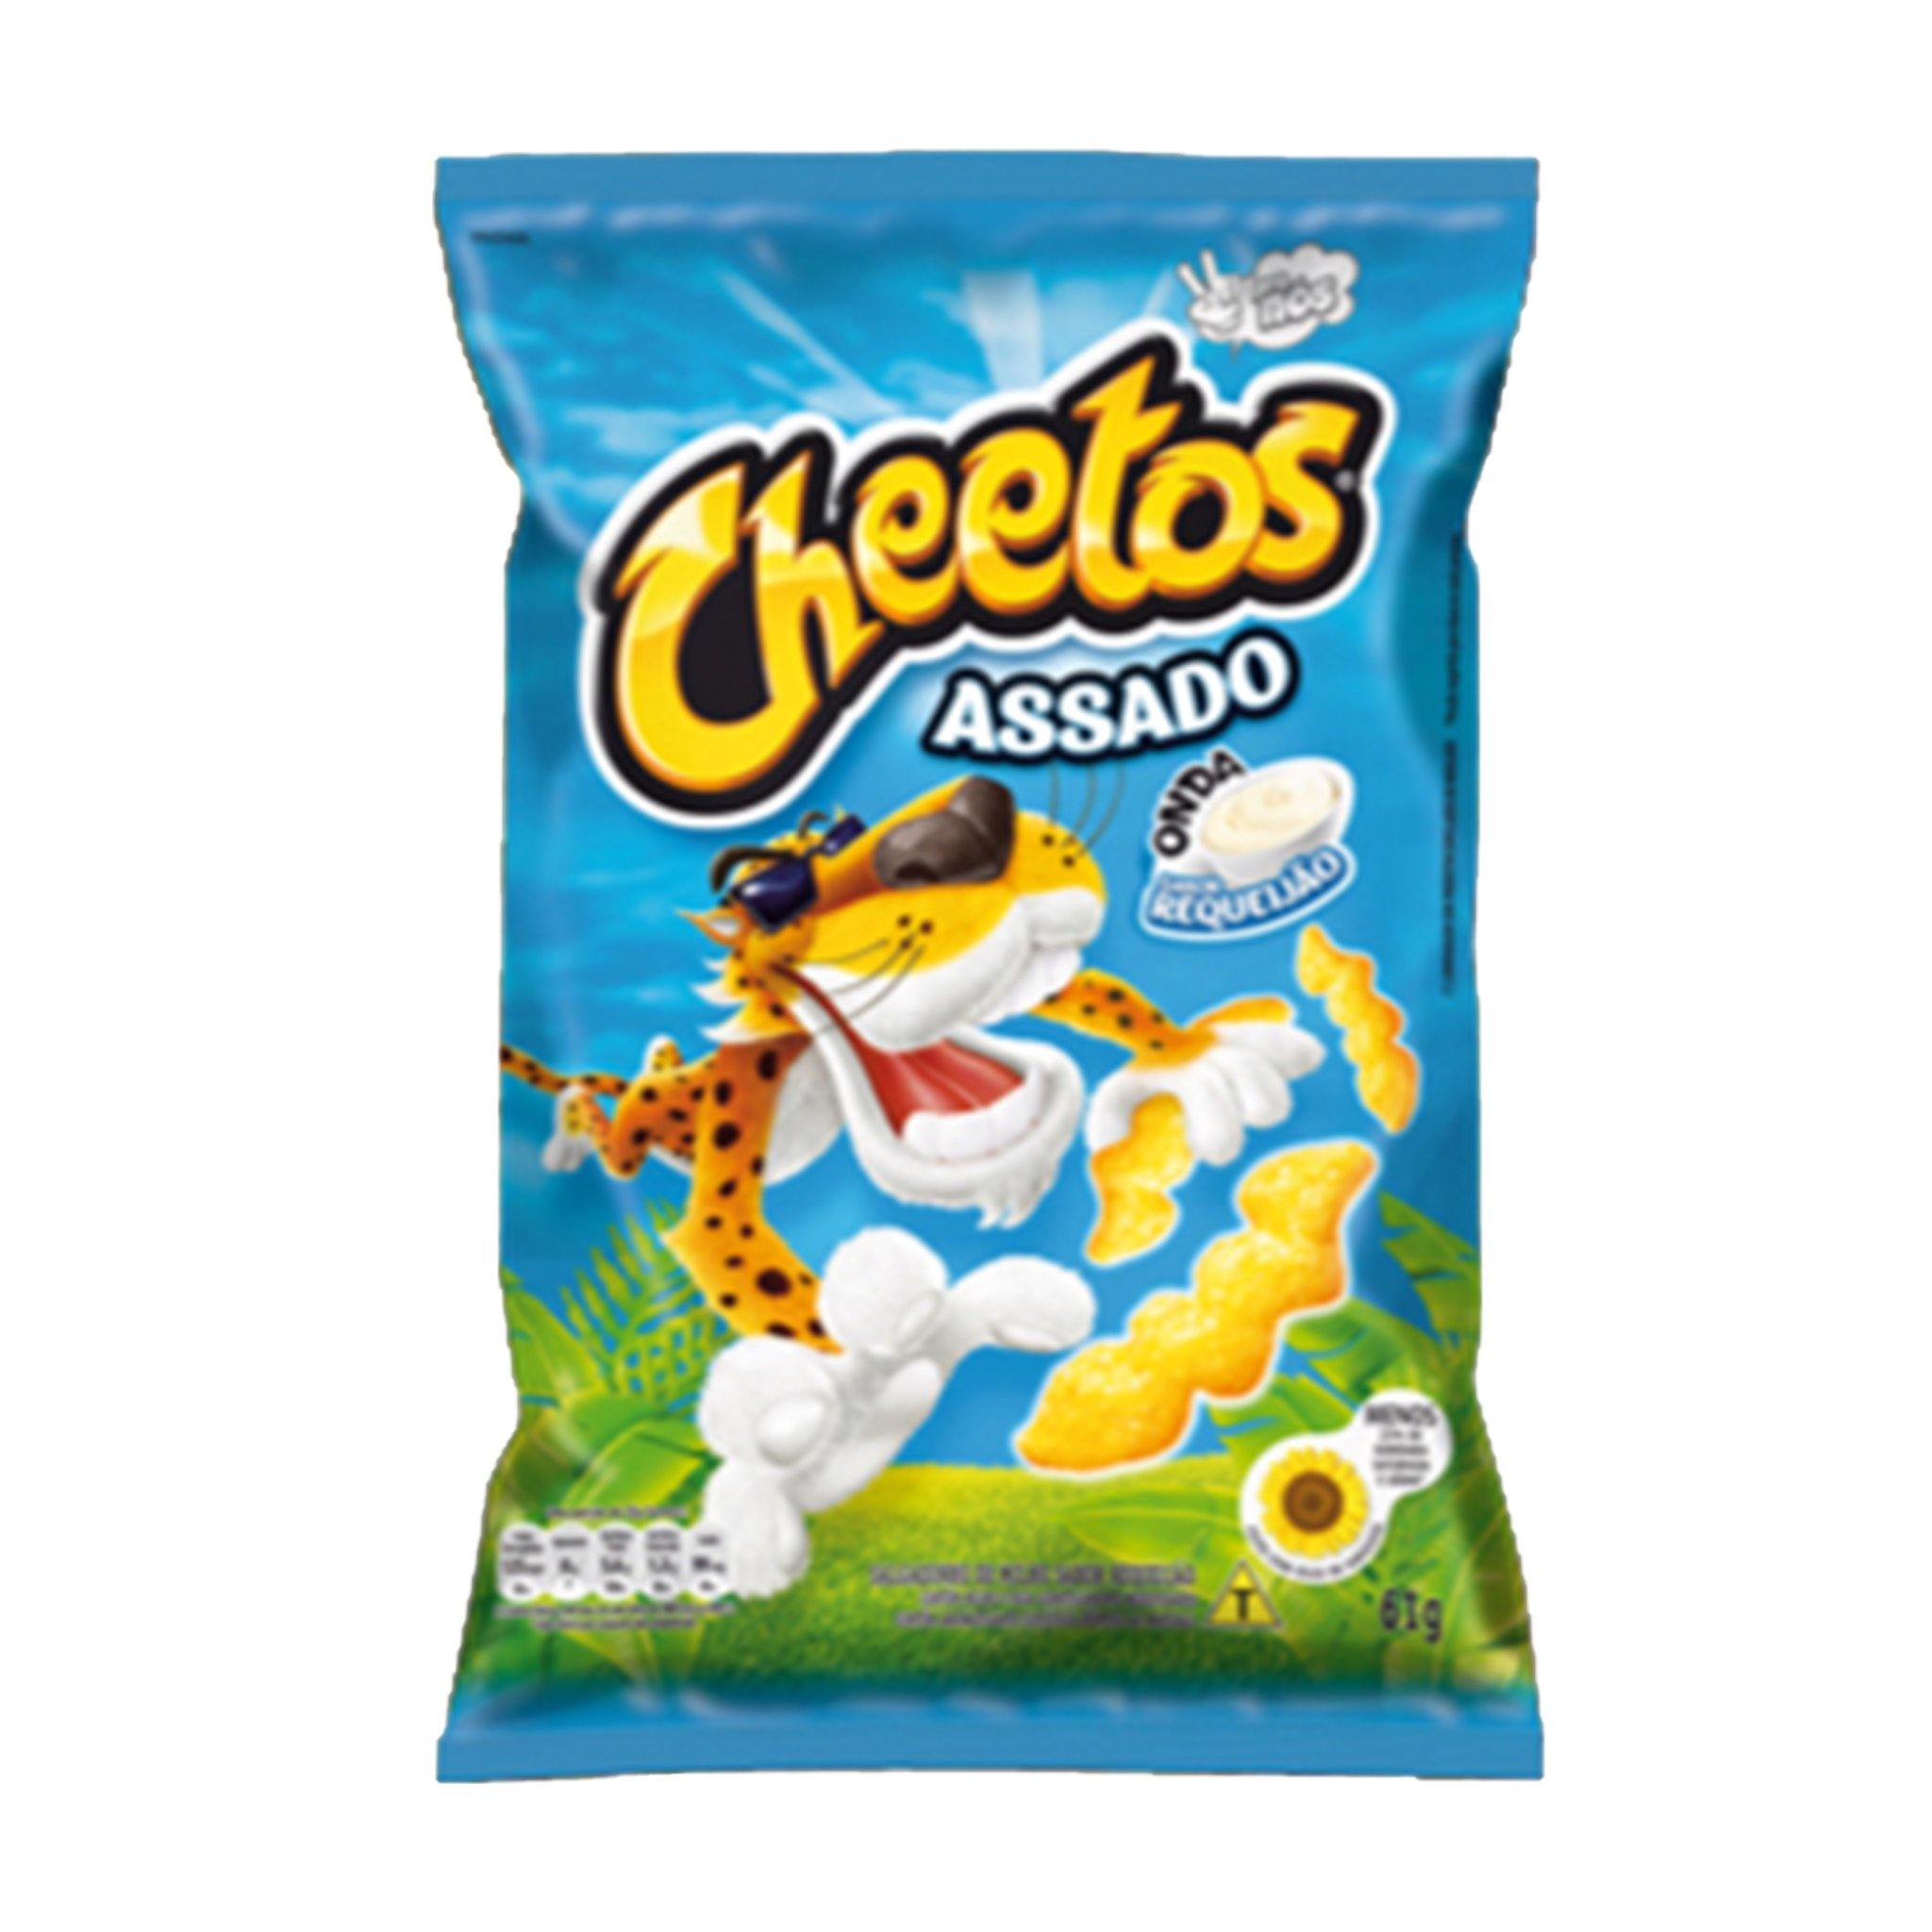 Cheetos Assado Onda Requeijão - Brazil - Sweet Exotics